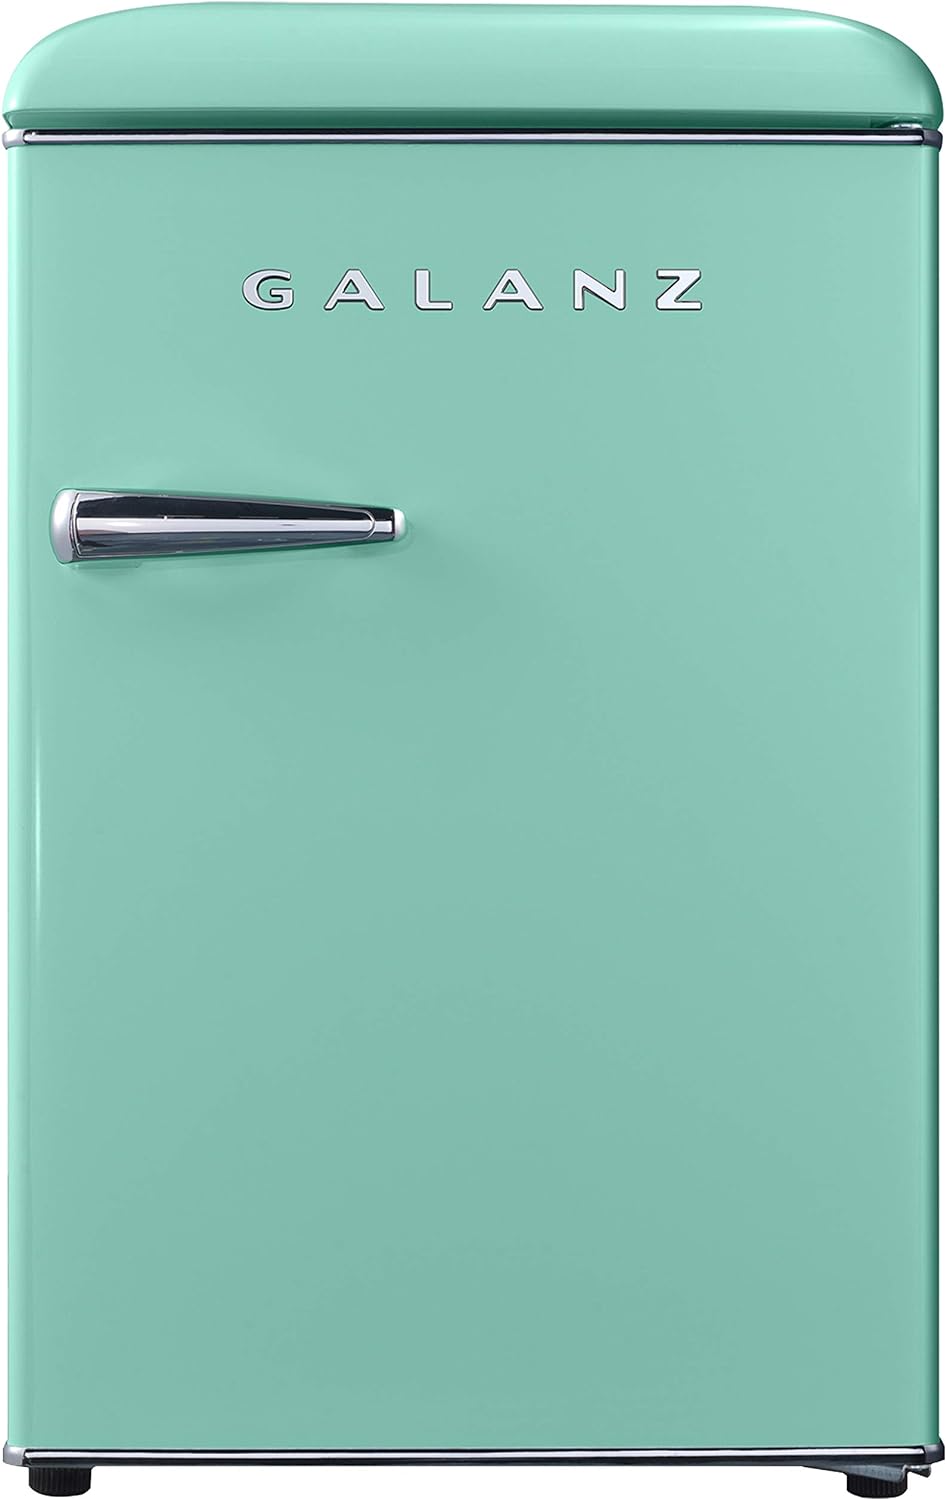 Galanz 2.5 Cu Ft Retro Style Mini Fridge with Adjustable Thermostat, Green